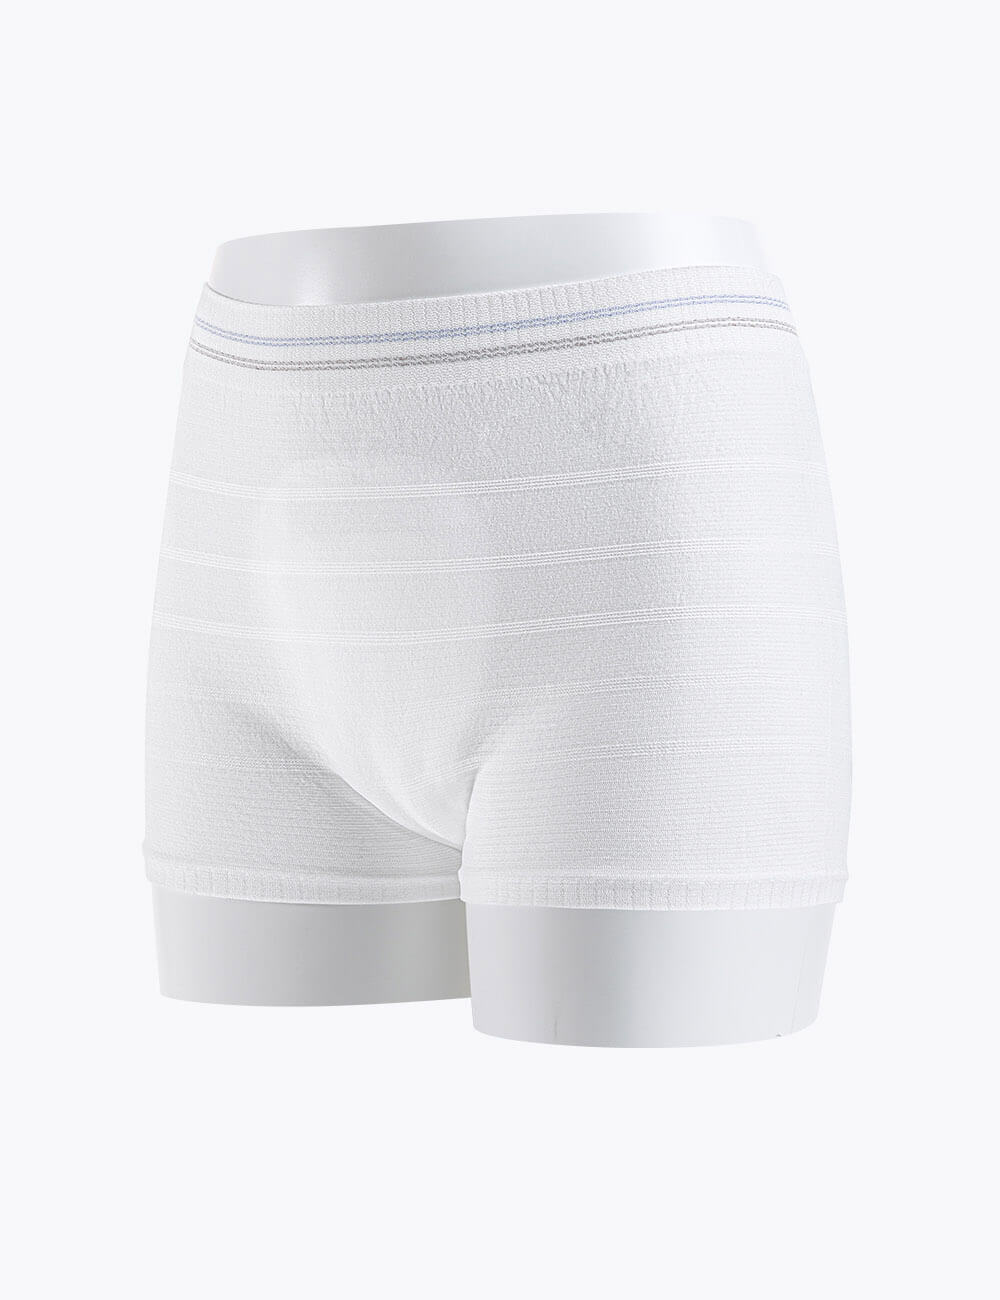 Postpartum Disposable Mesh Underwear Plus Size For C-Section Incontinence -  9120